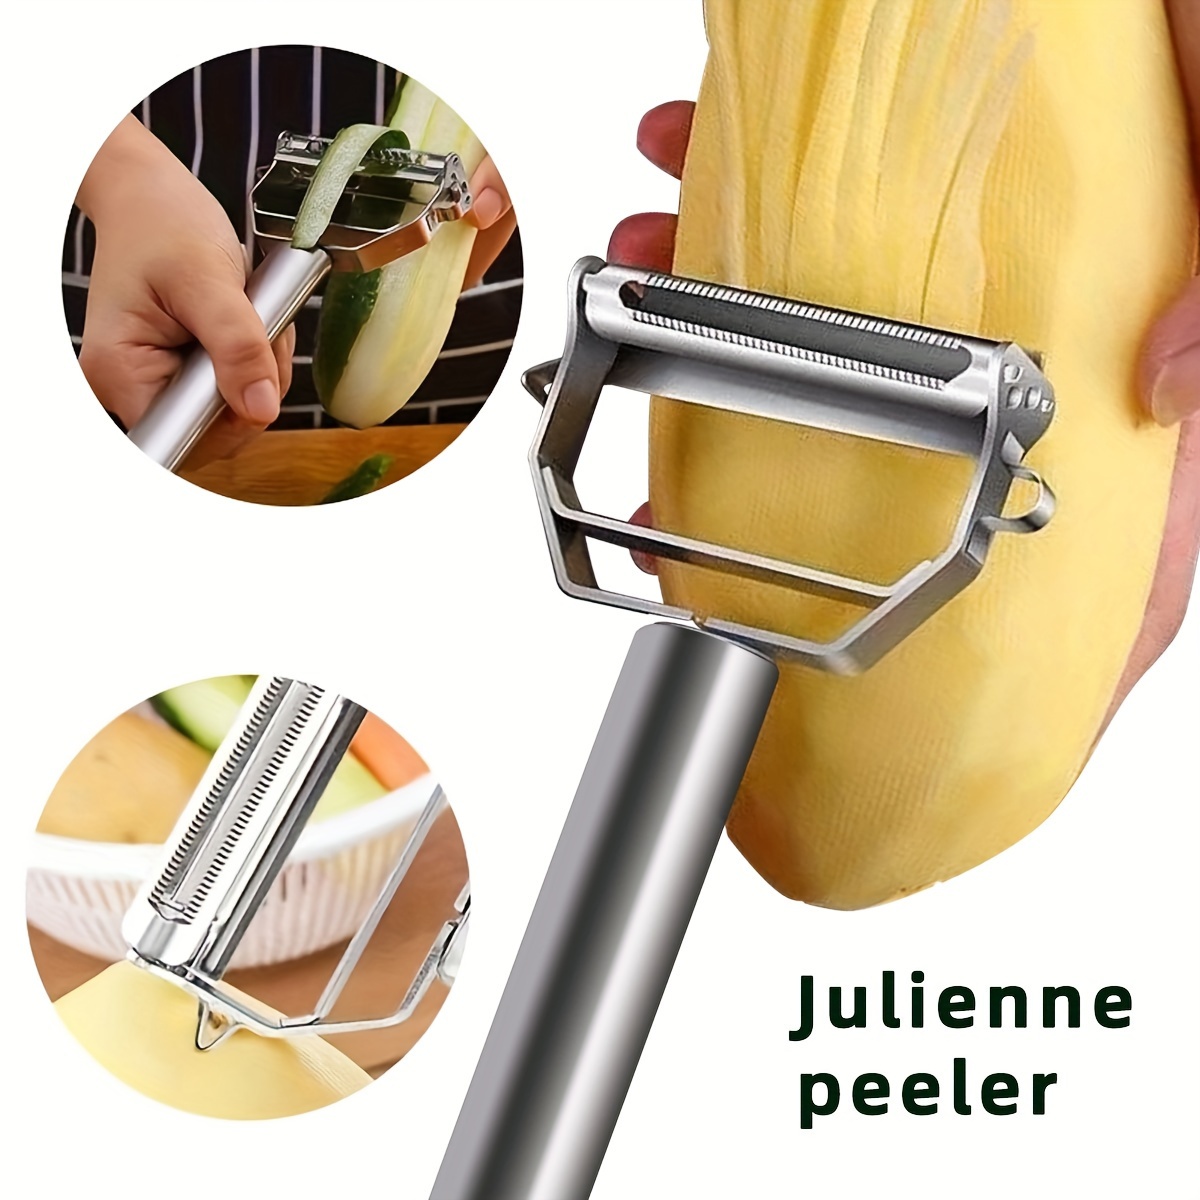 

1pc 2 In 1 Julienne Slicer Peeler, Y-peeler, Stainless Steel Sharp Serrate Blade Vegetable & Fruit Peeler, Competent Peeling Back Or Forth, Kitchen Utensils